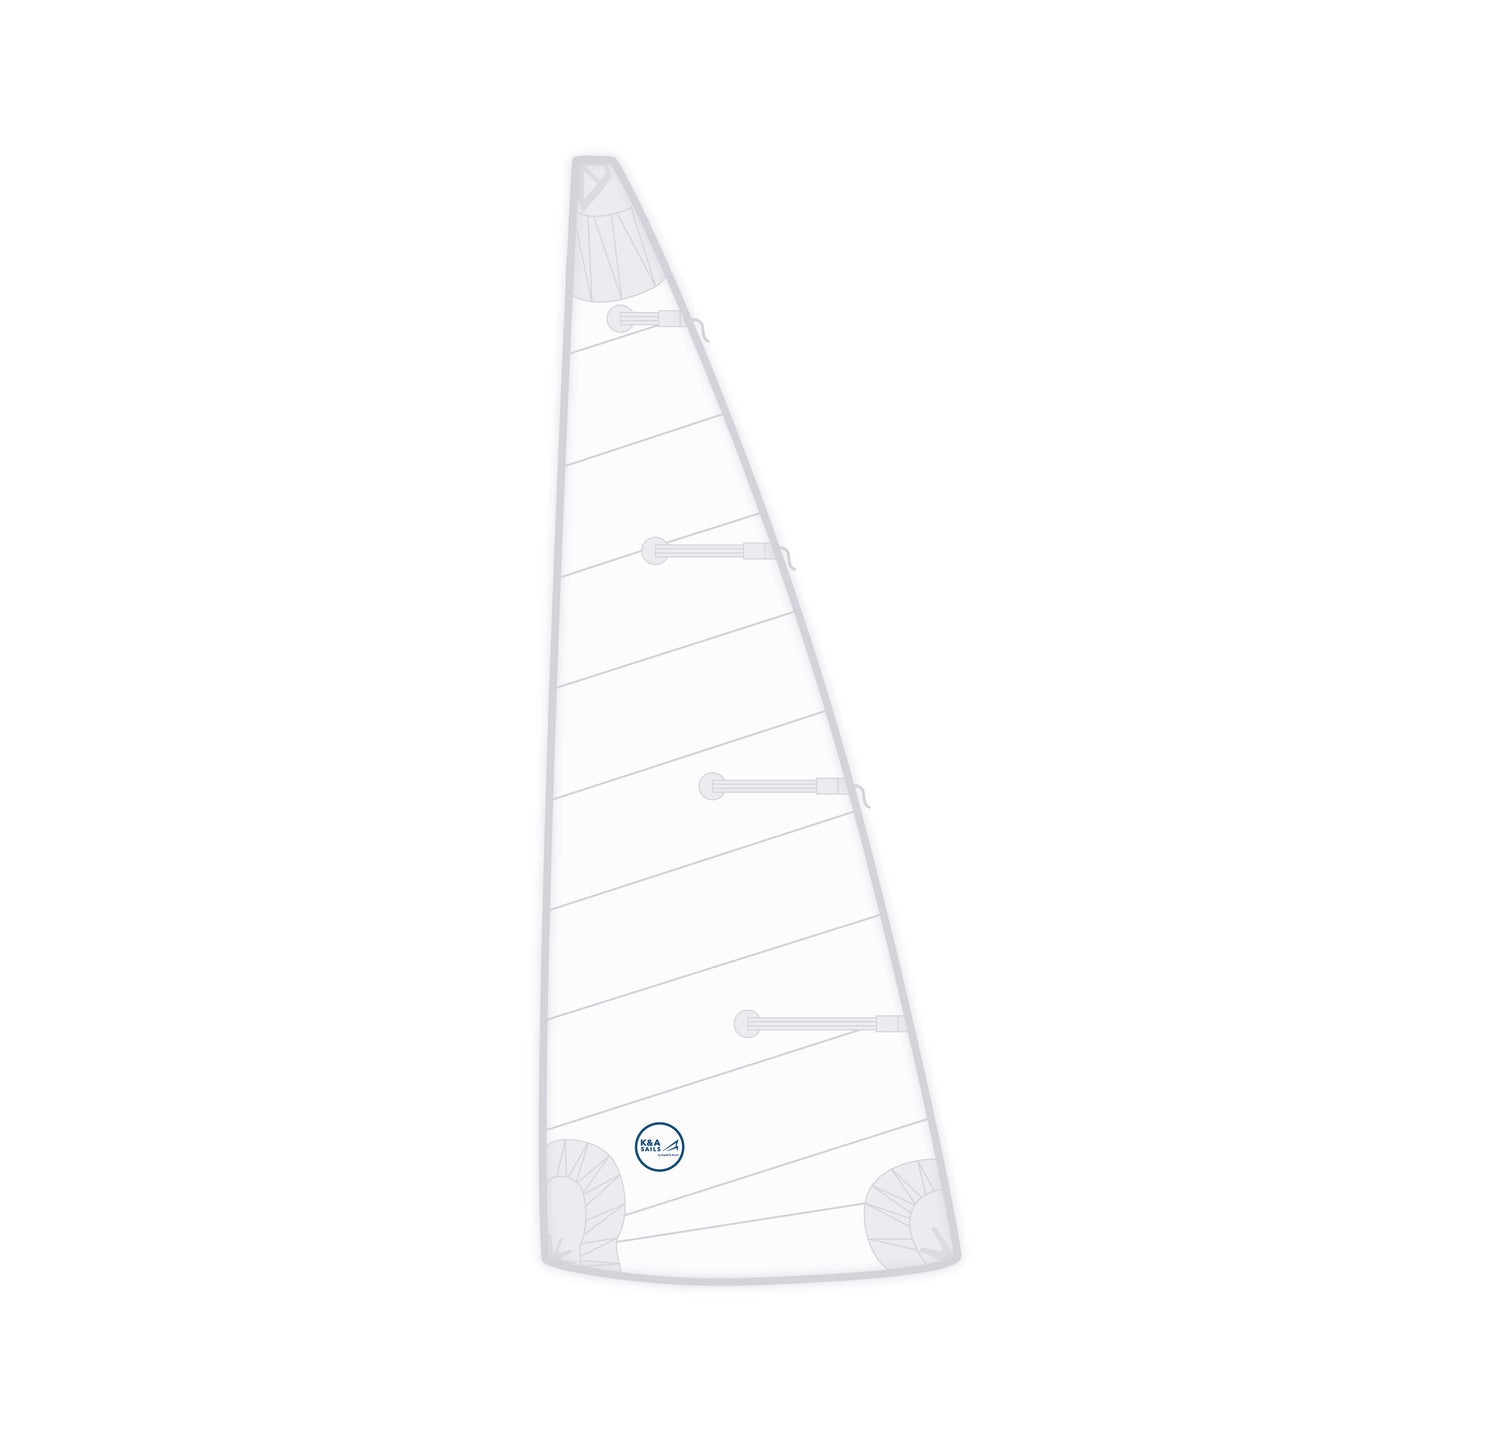 Cruising sail mainsail